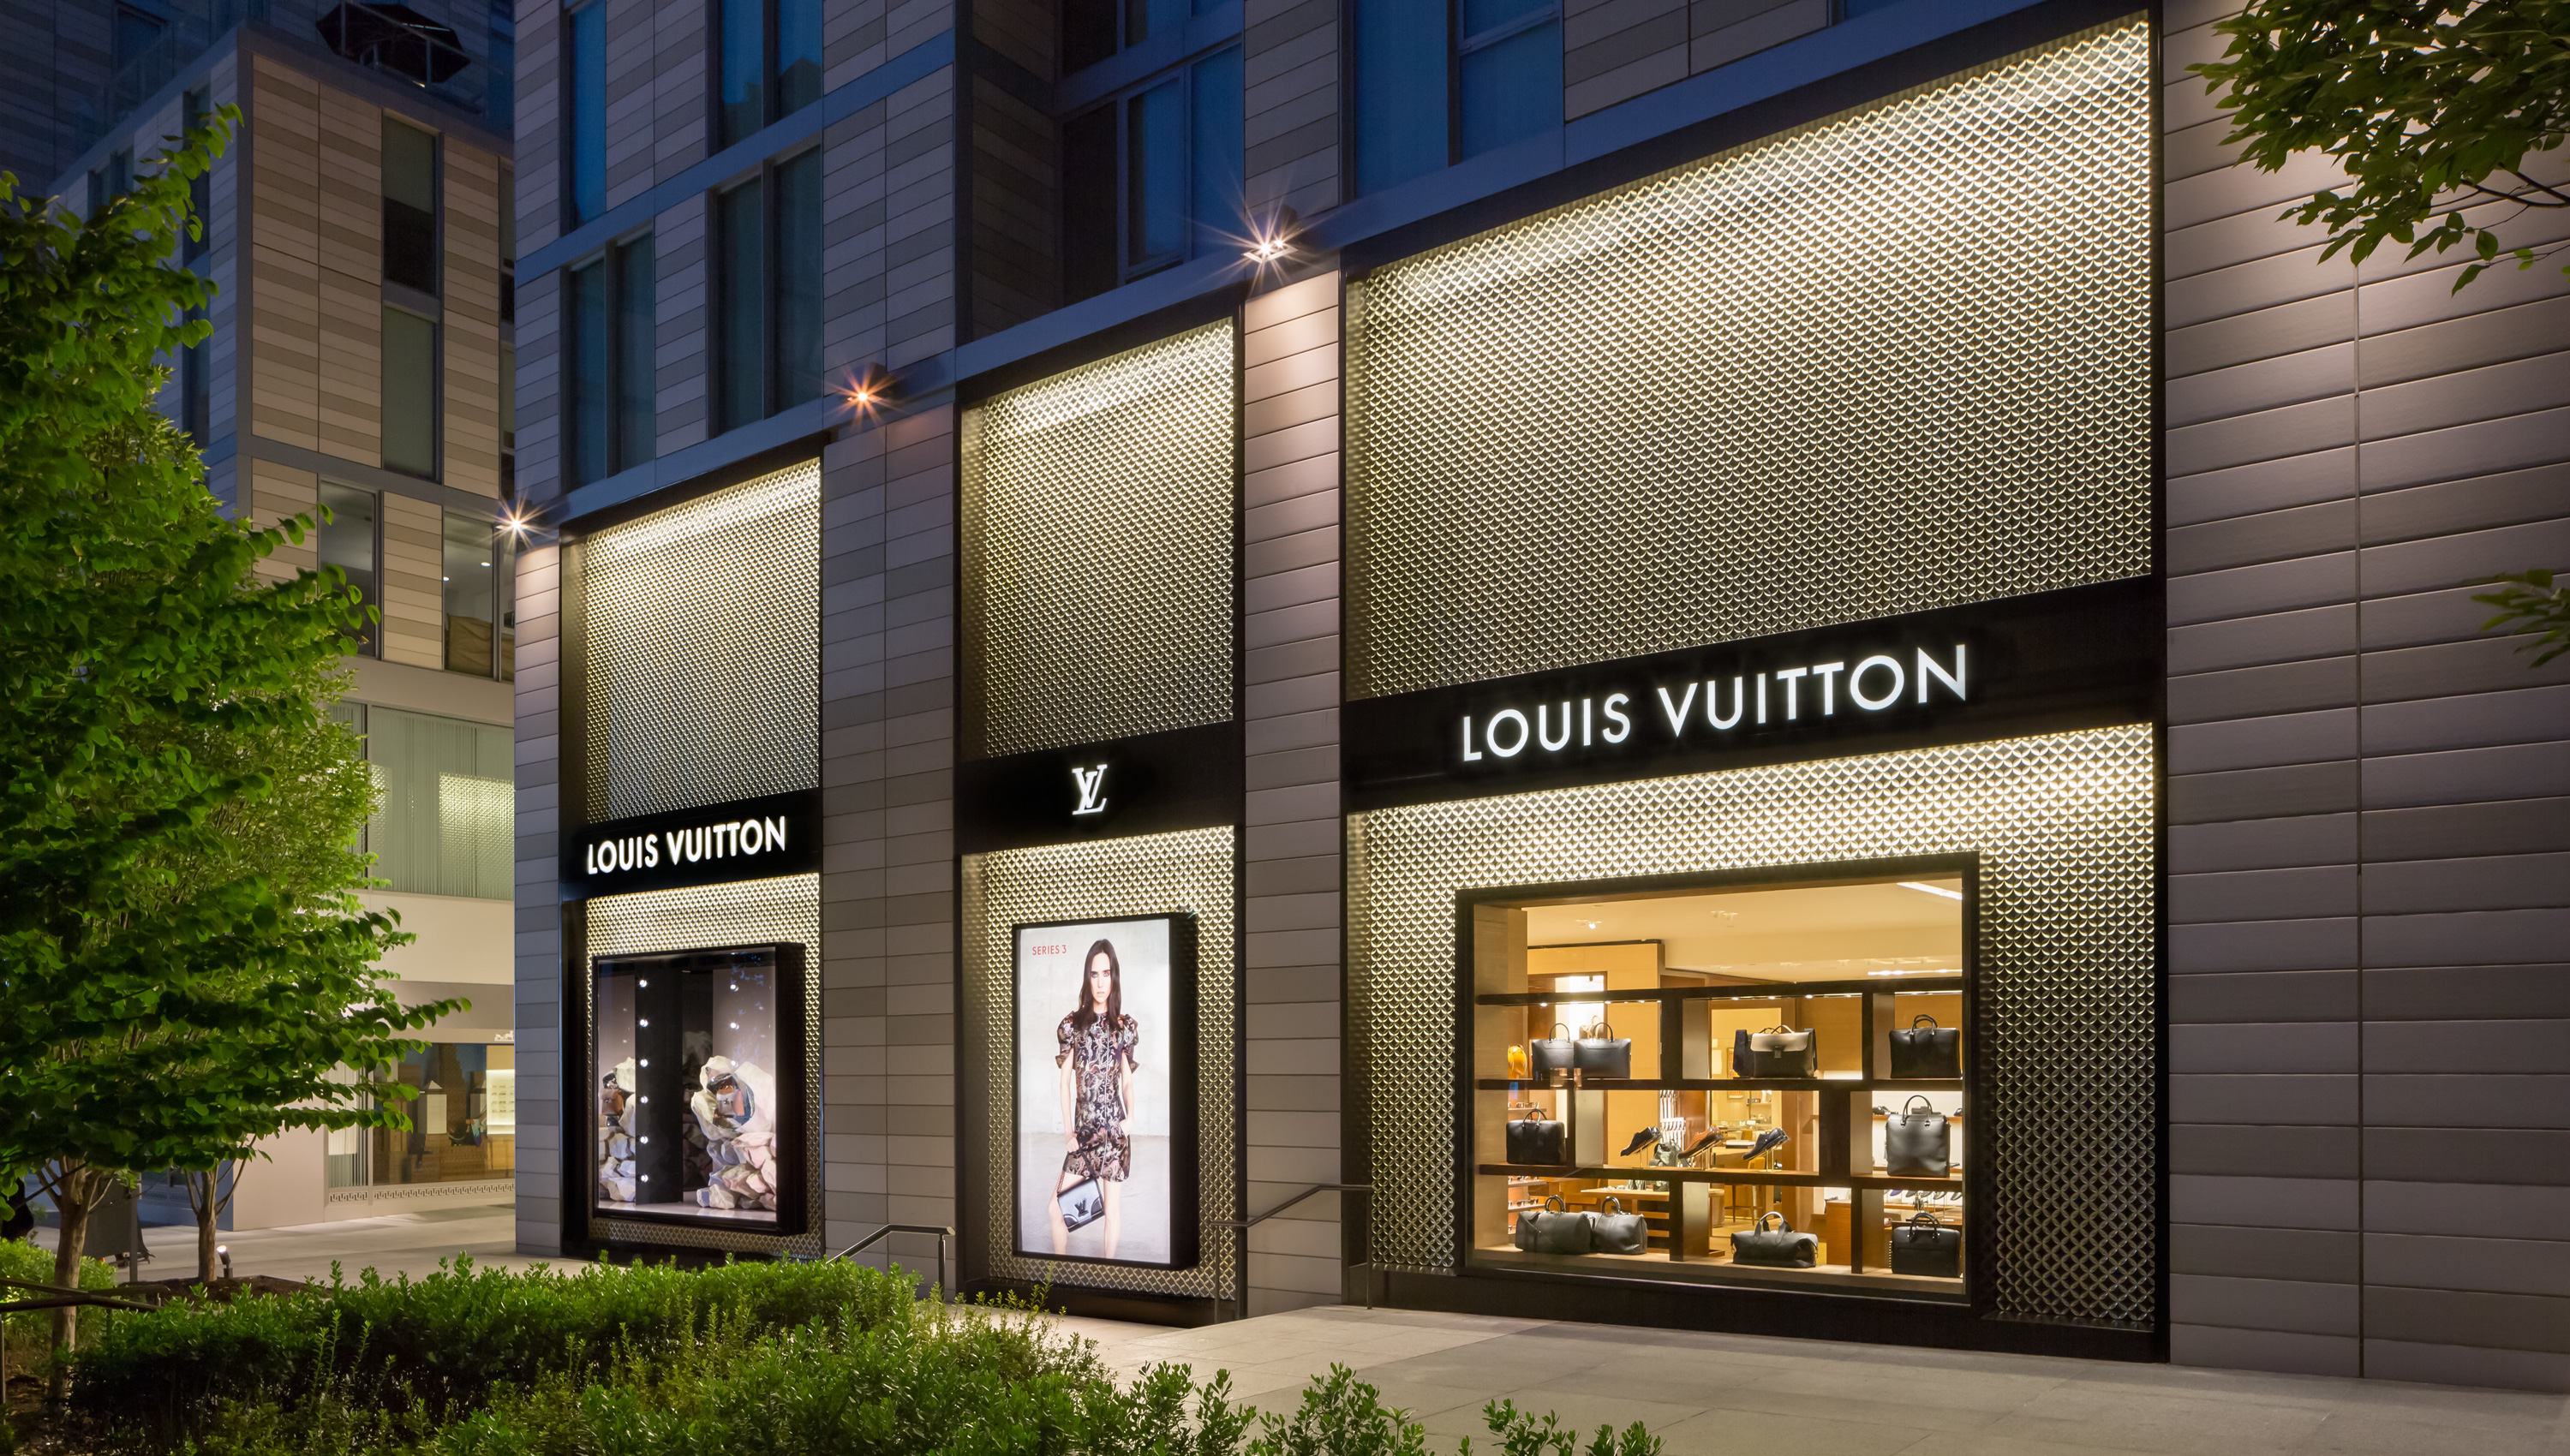 Louis Vuitton Washington DC CityCenter, Washington DC (DC) - 0